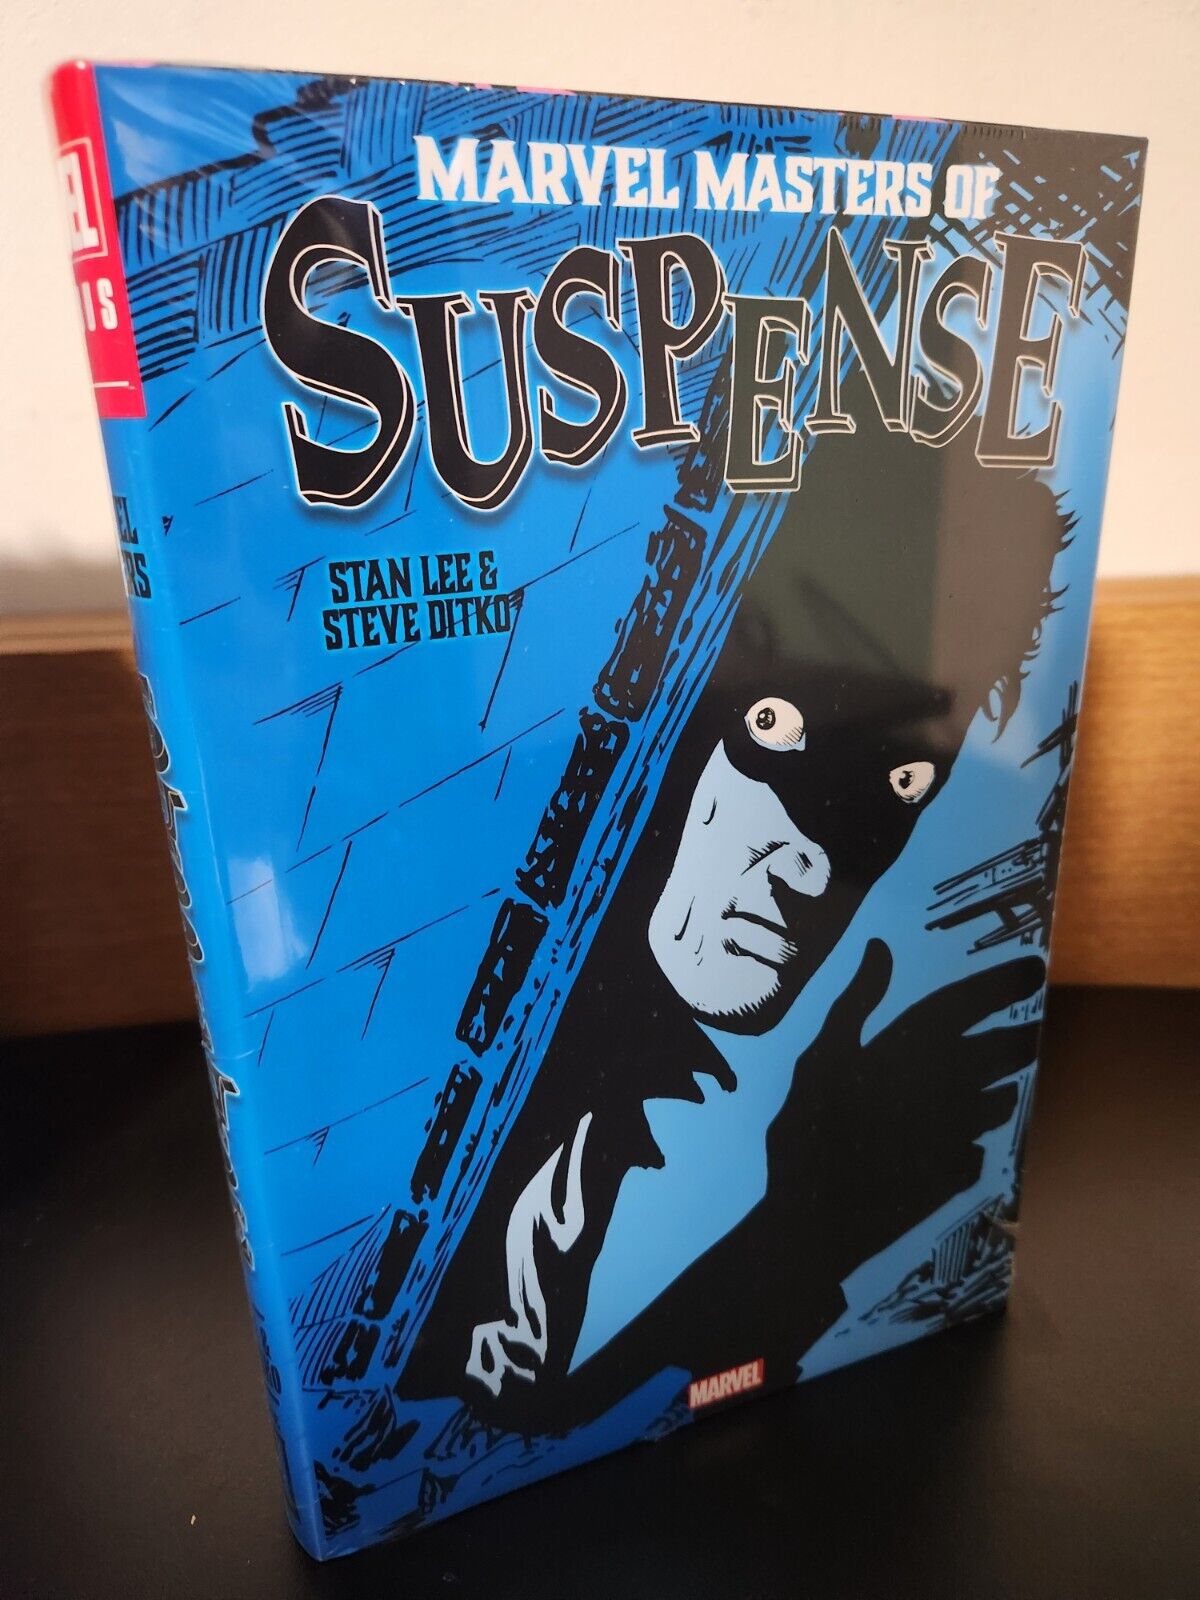 *NEW & SEALED* Marvel Masters of Suspense Steve Ditko Vol 2 Omnibus HC